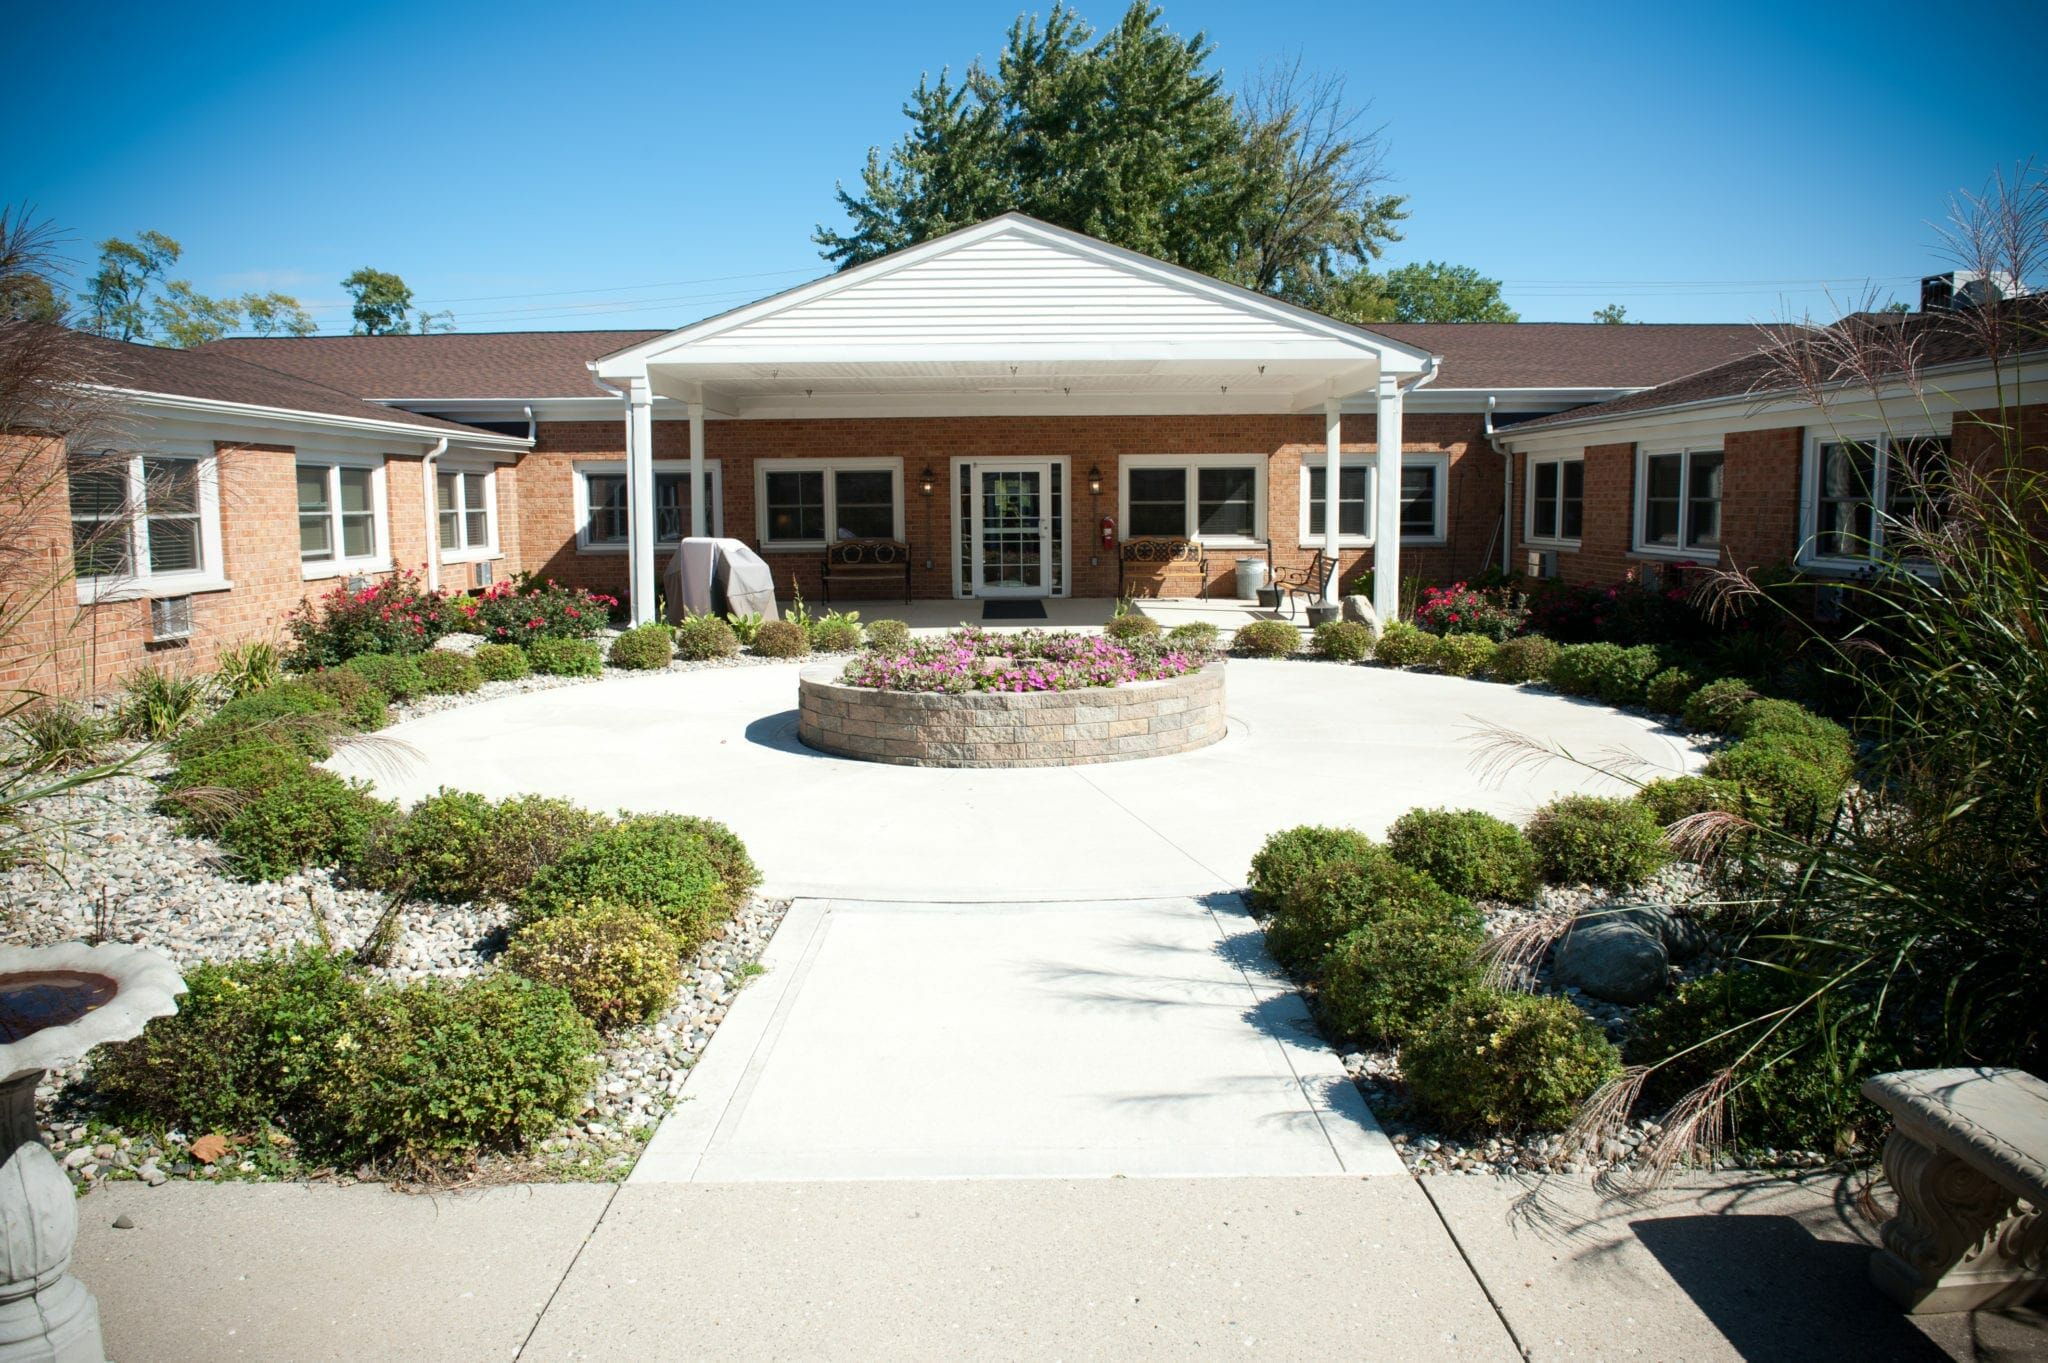 Glenbrook Rehabilitation & Skilled Nursing Center 5